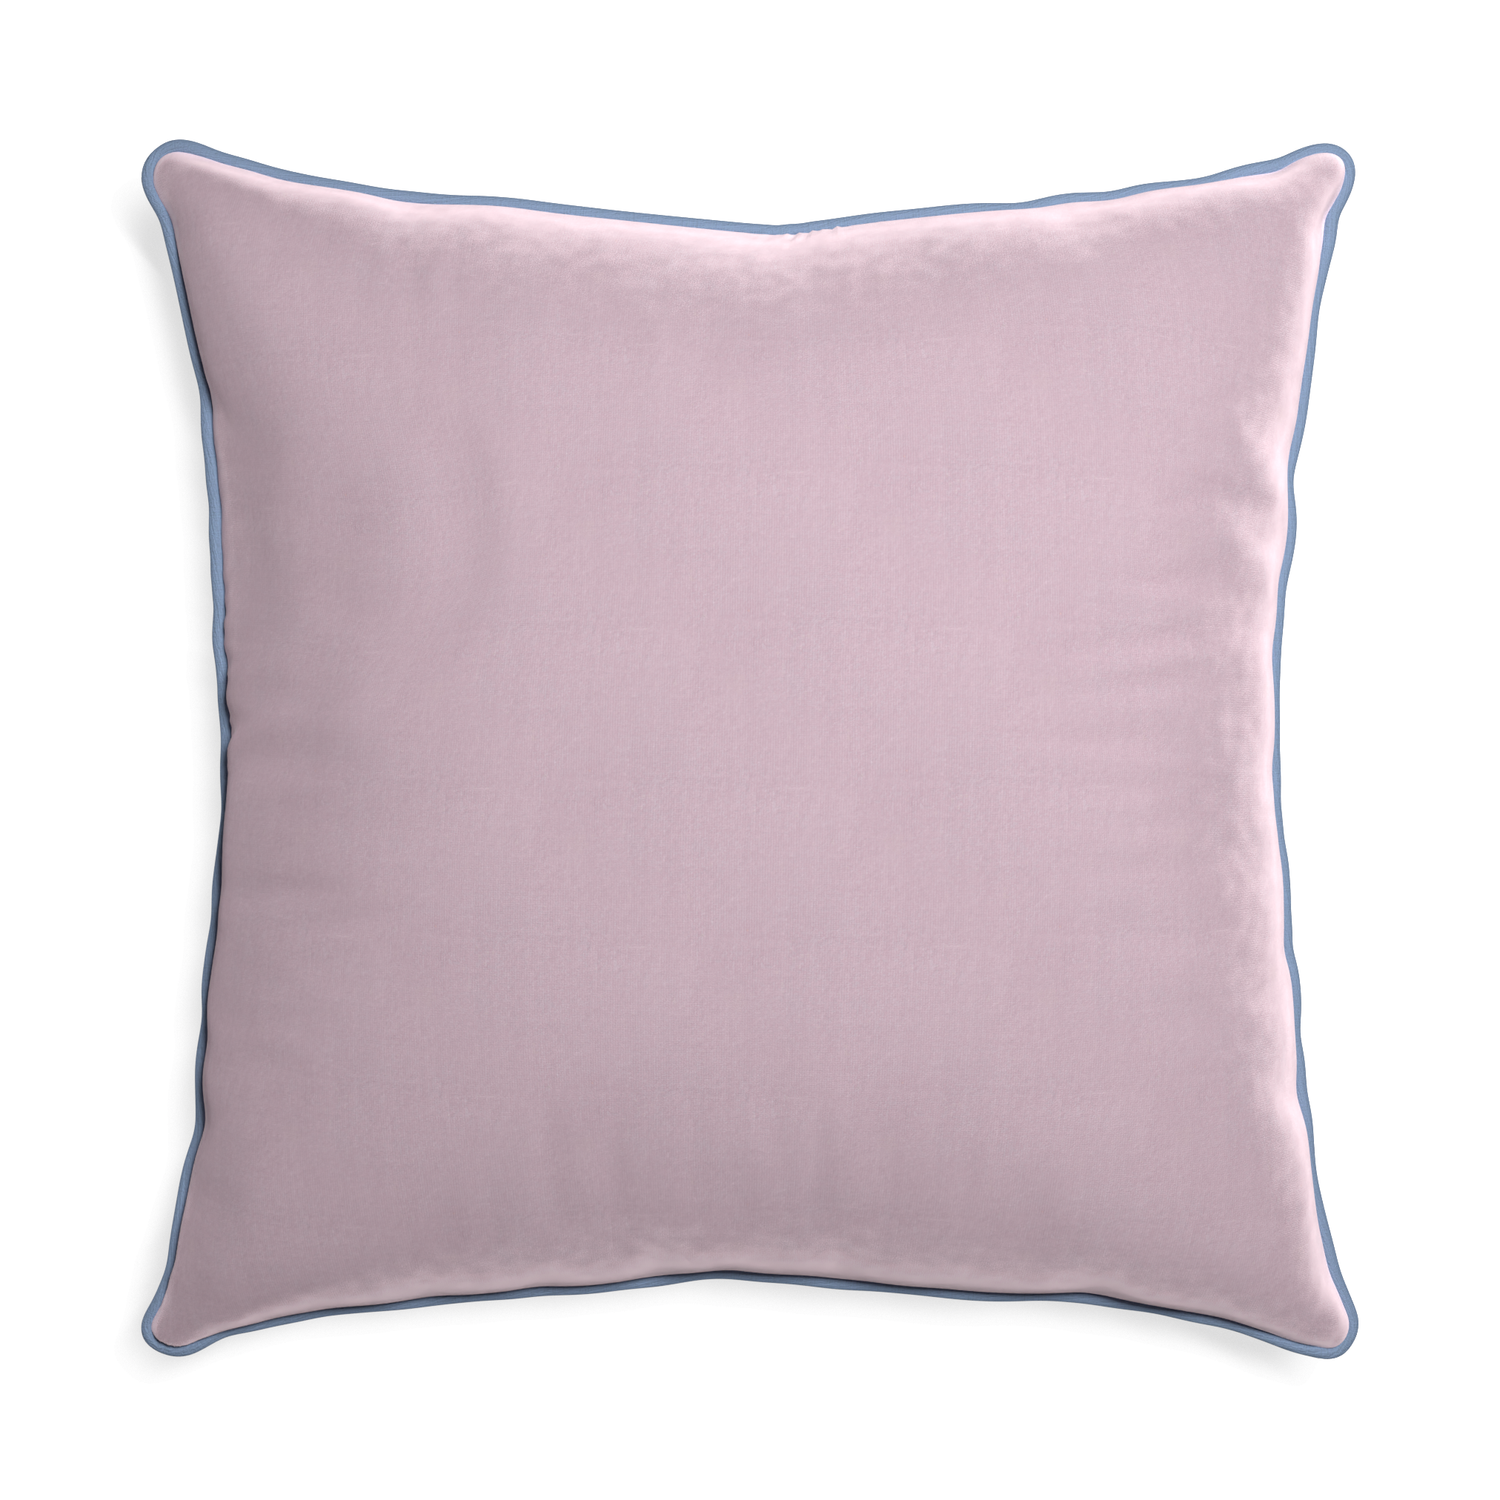 Euro-sham lilac velvet custom pillow with sky piping on white background